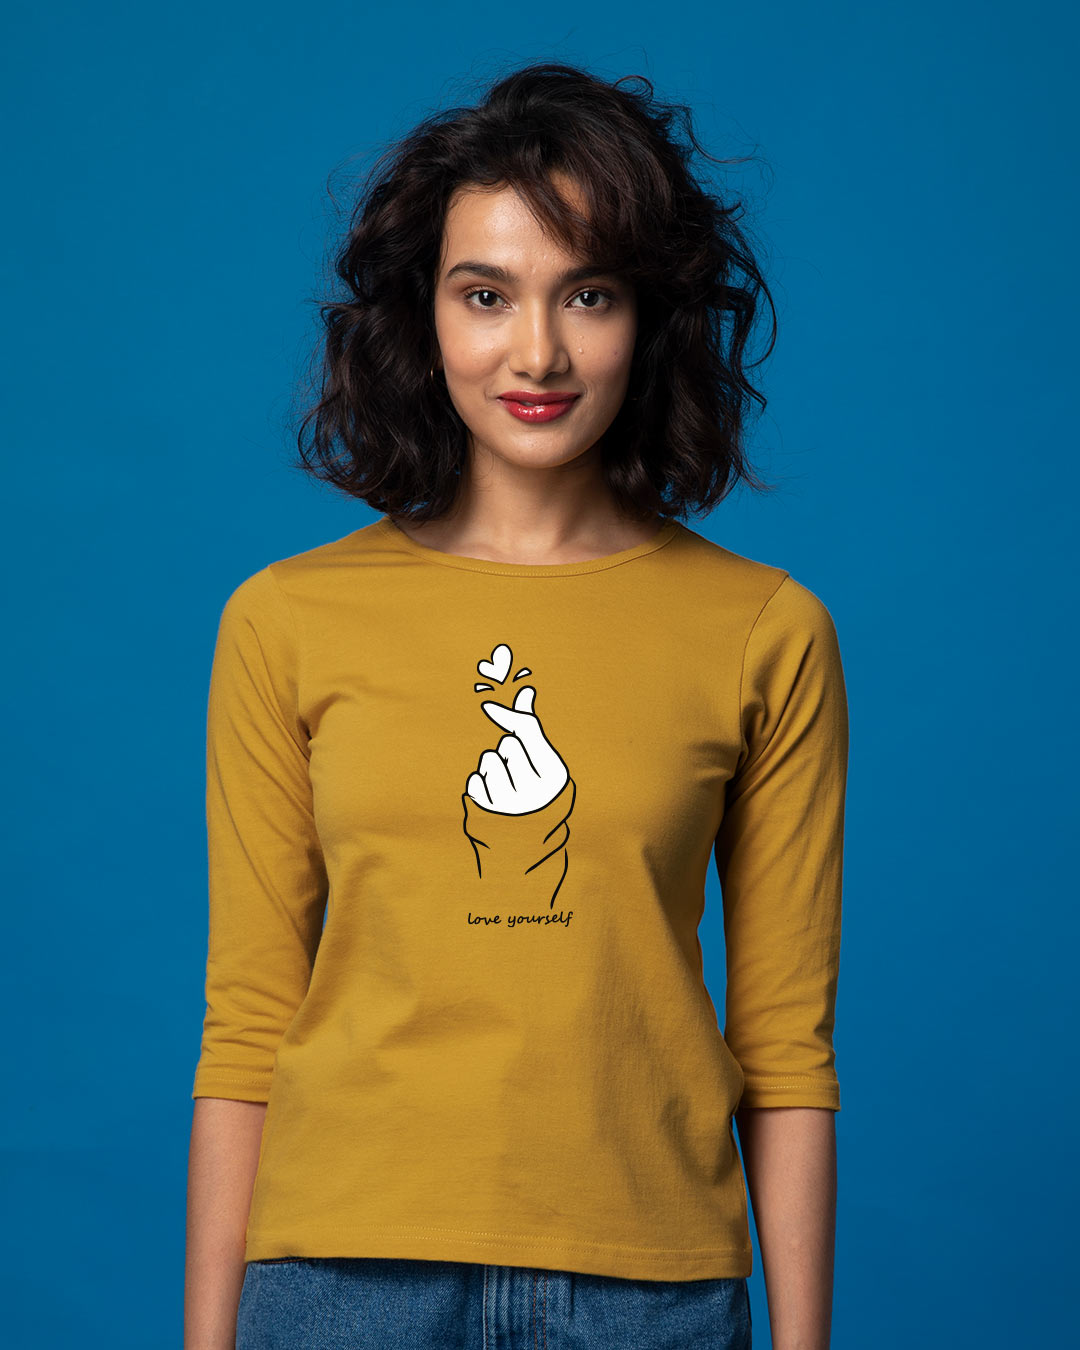 Buy Bts Love Yourself Printed 3/4 Sleeve TShirt For Women